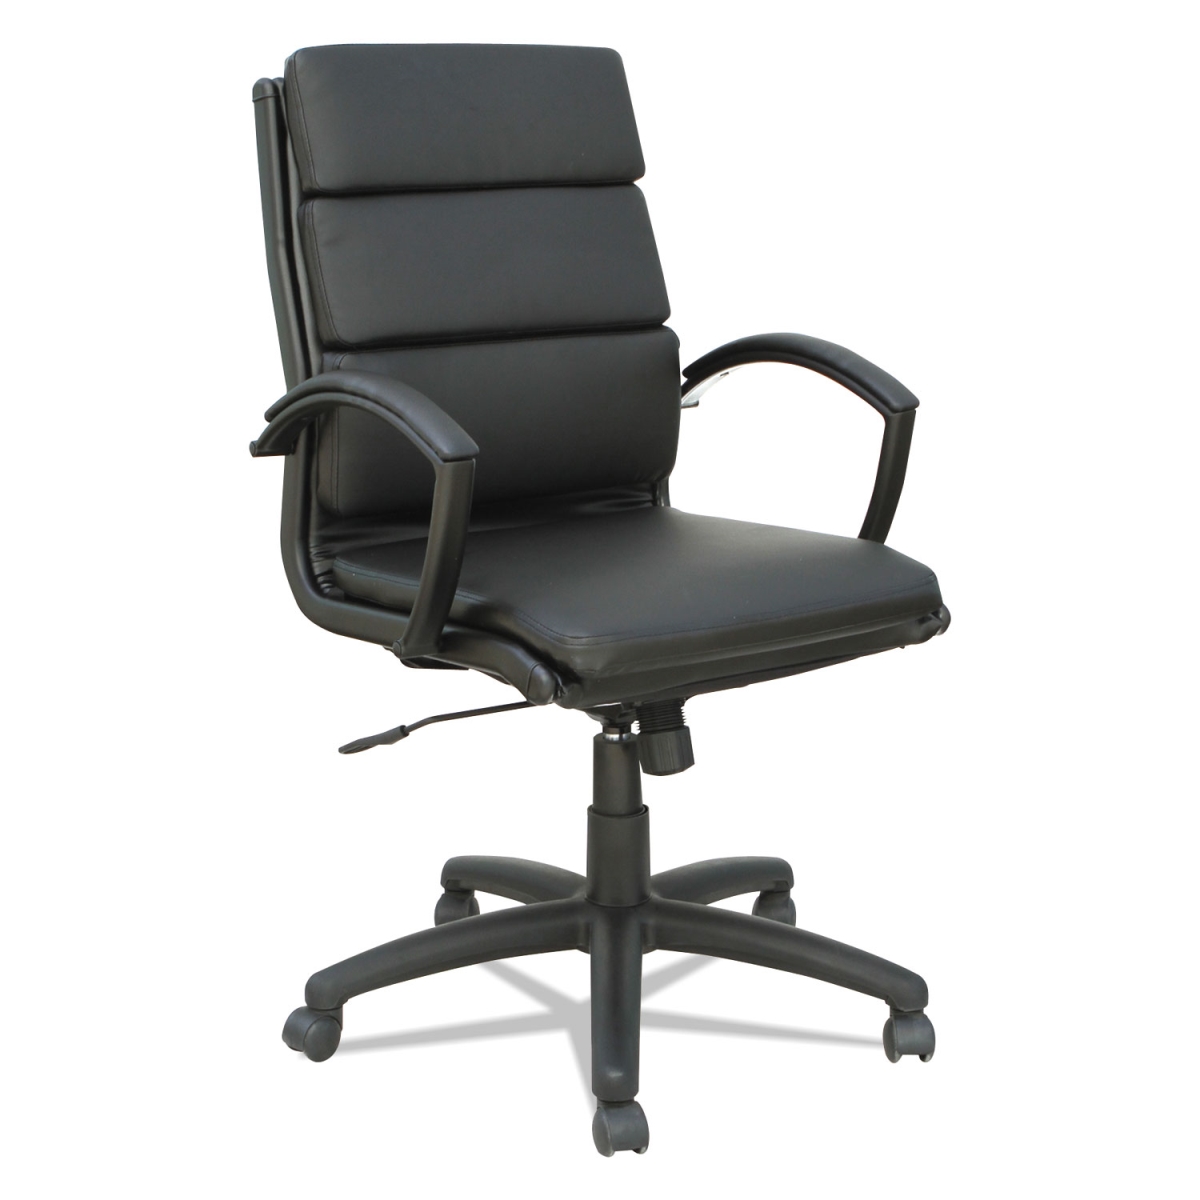 Alera Alenr42b19 Neratoli Leather Swivel & Tilt Mid-back Slim Profile Chair, Black